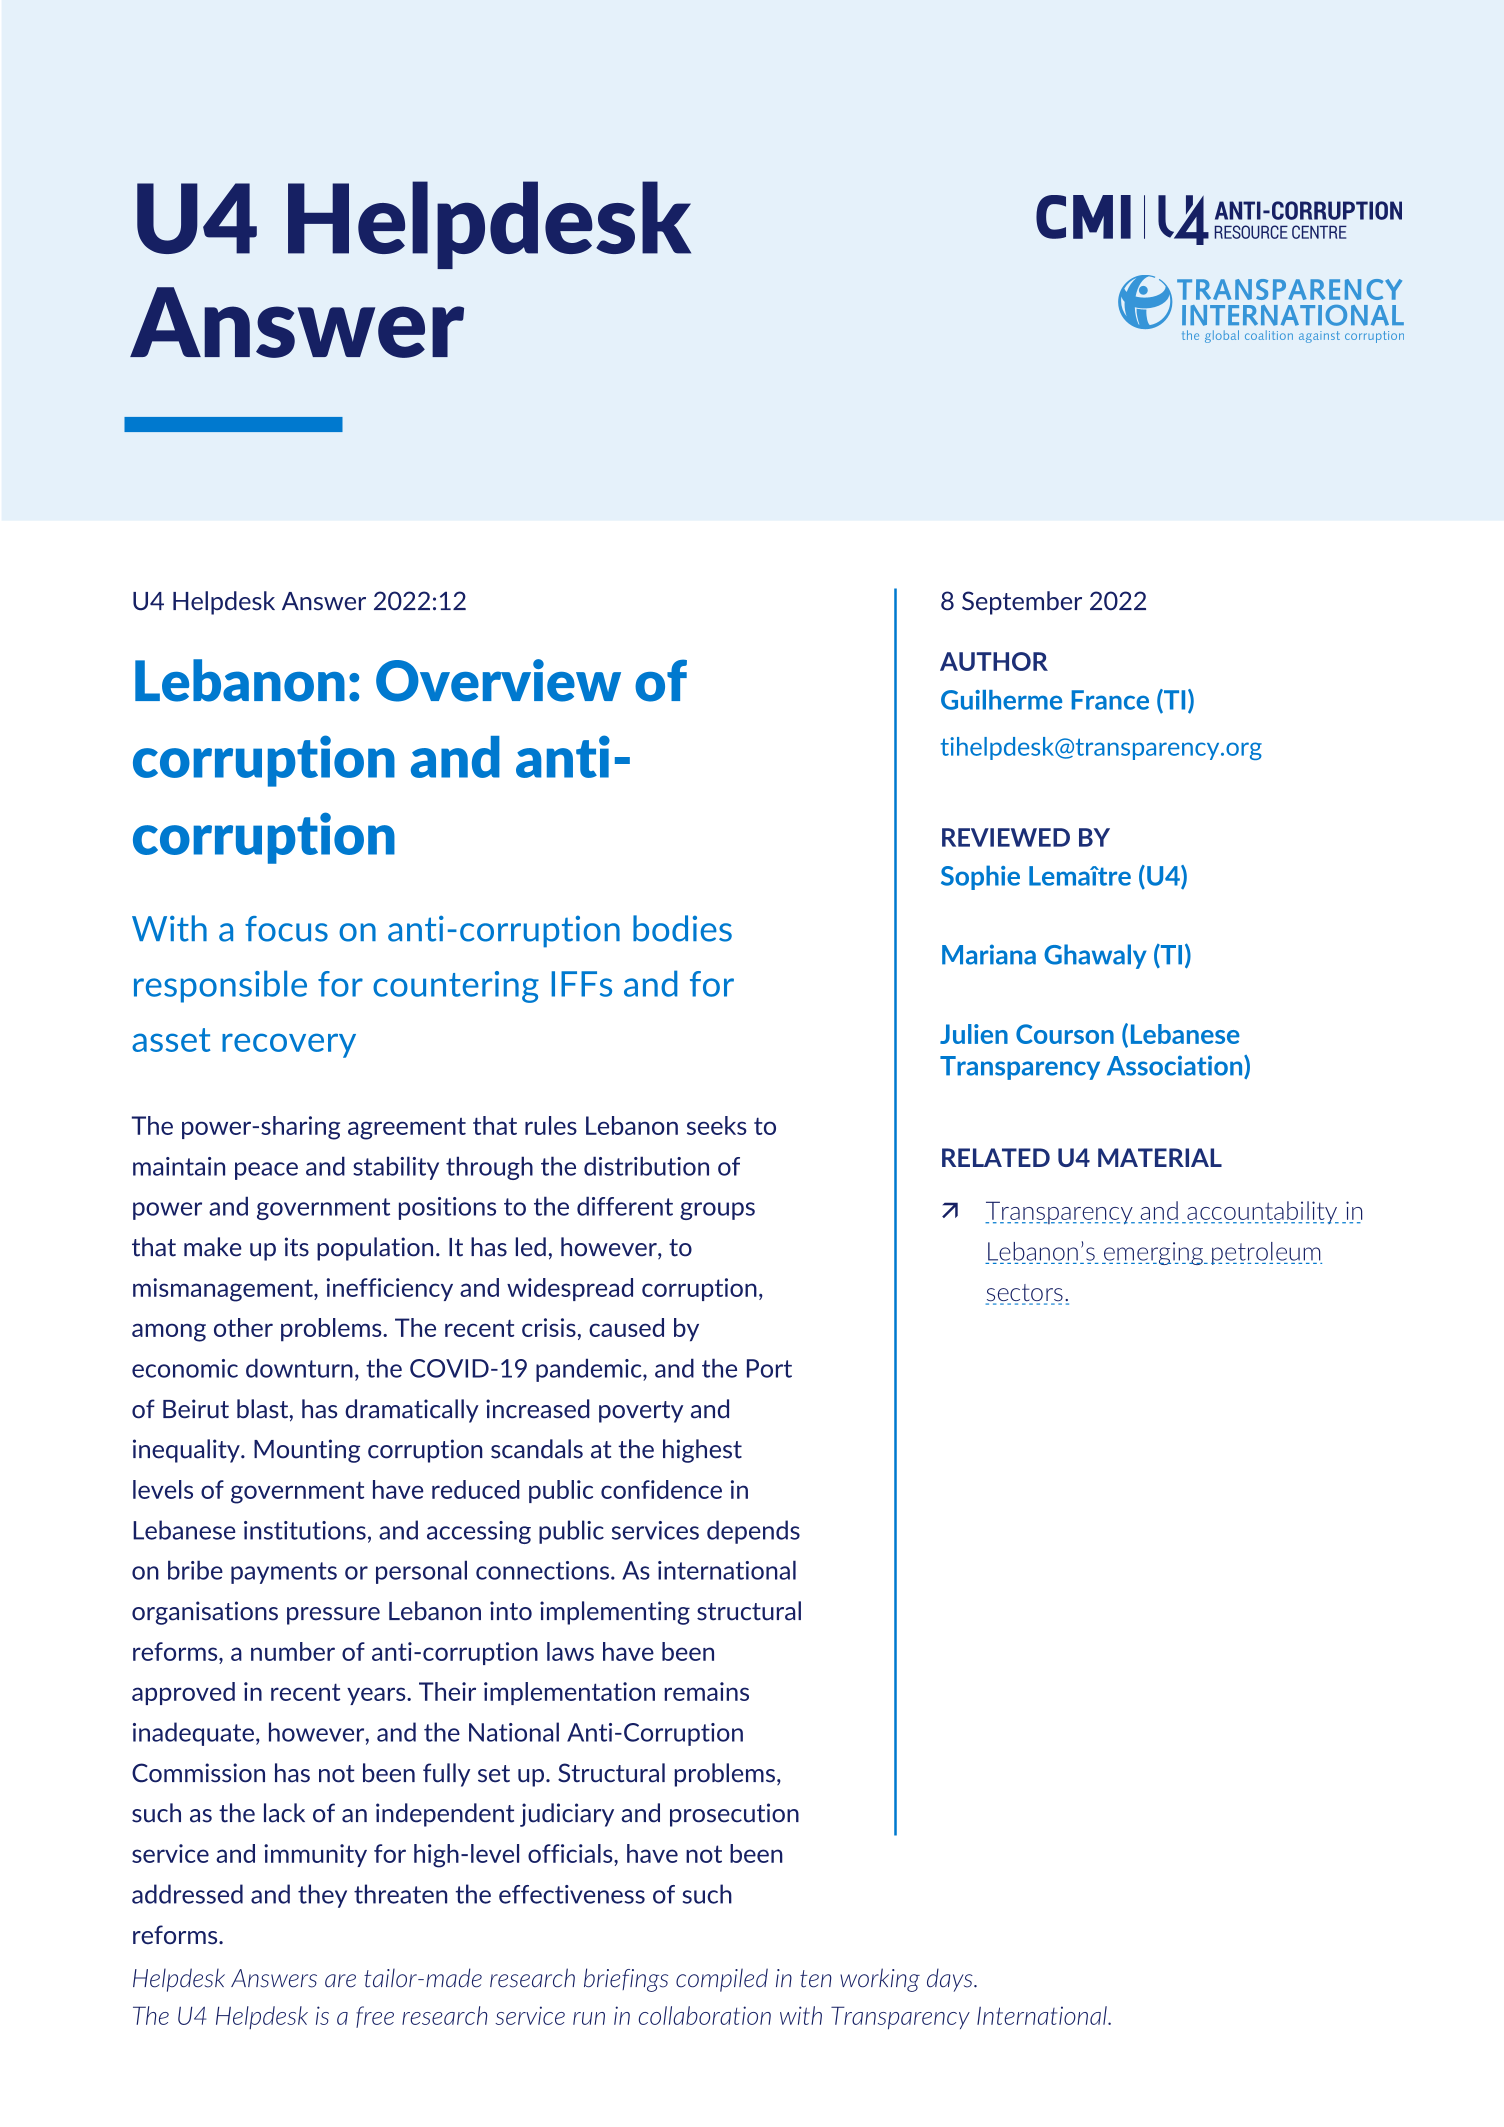 Lebanon: Overview of corruption and anti-corruption 